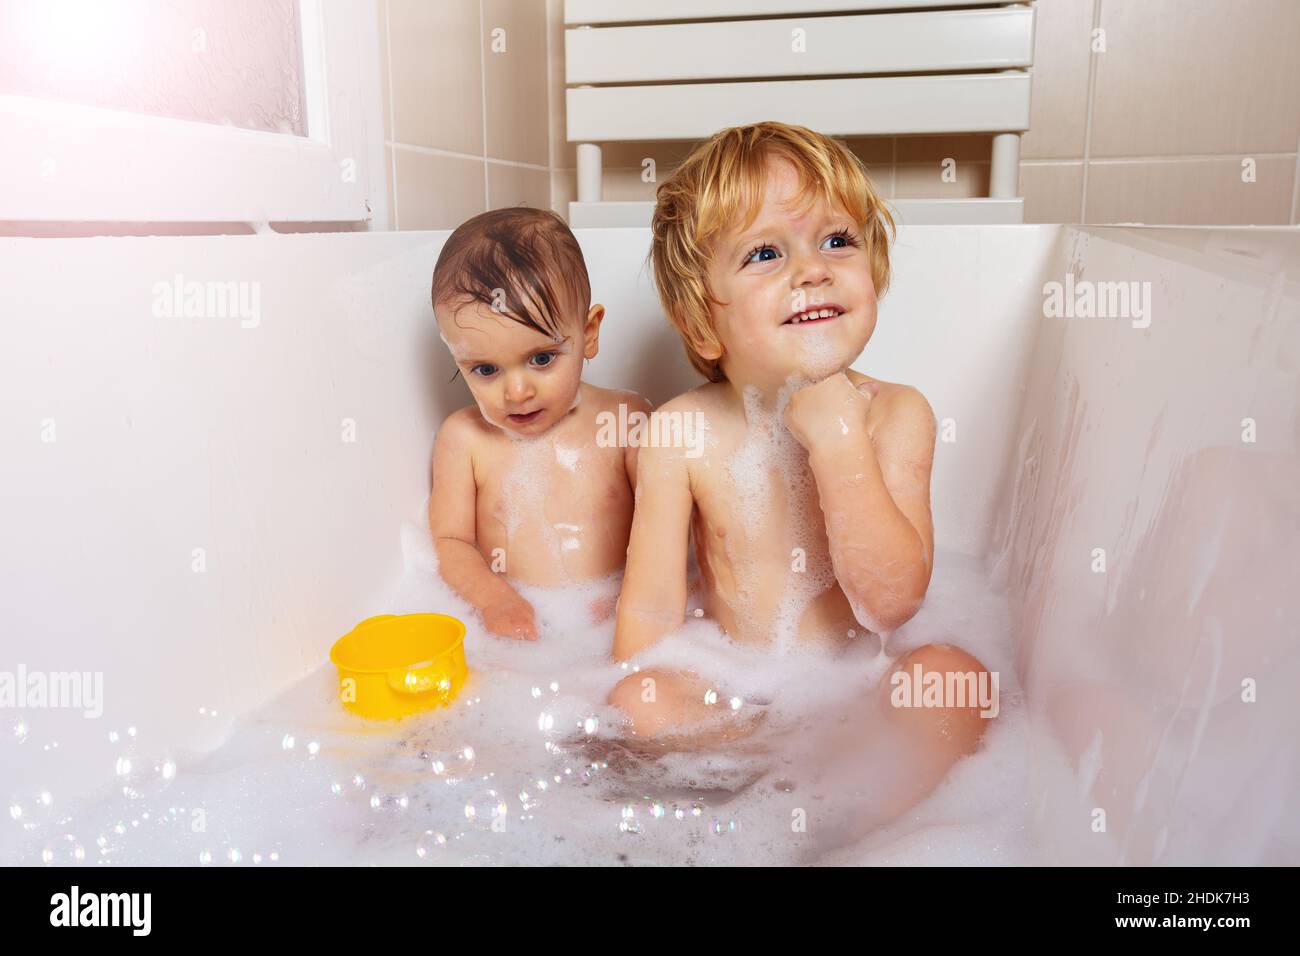 little boys in tub